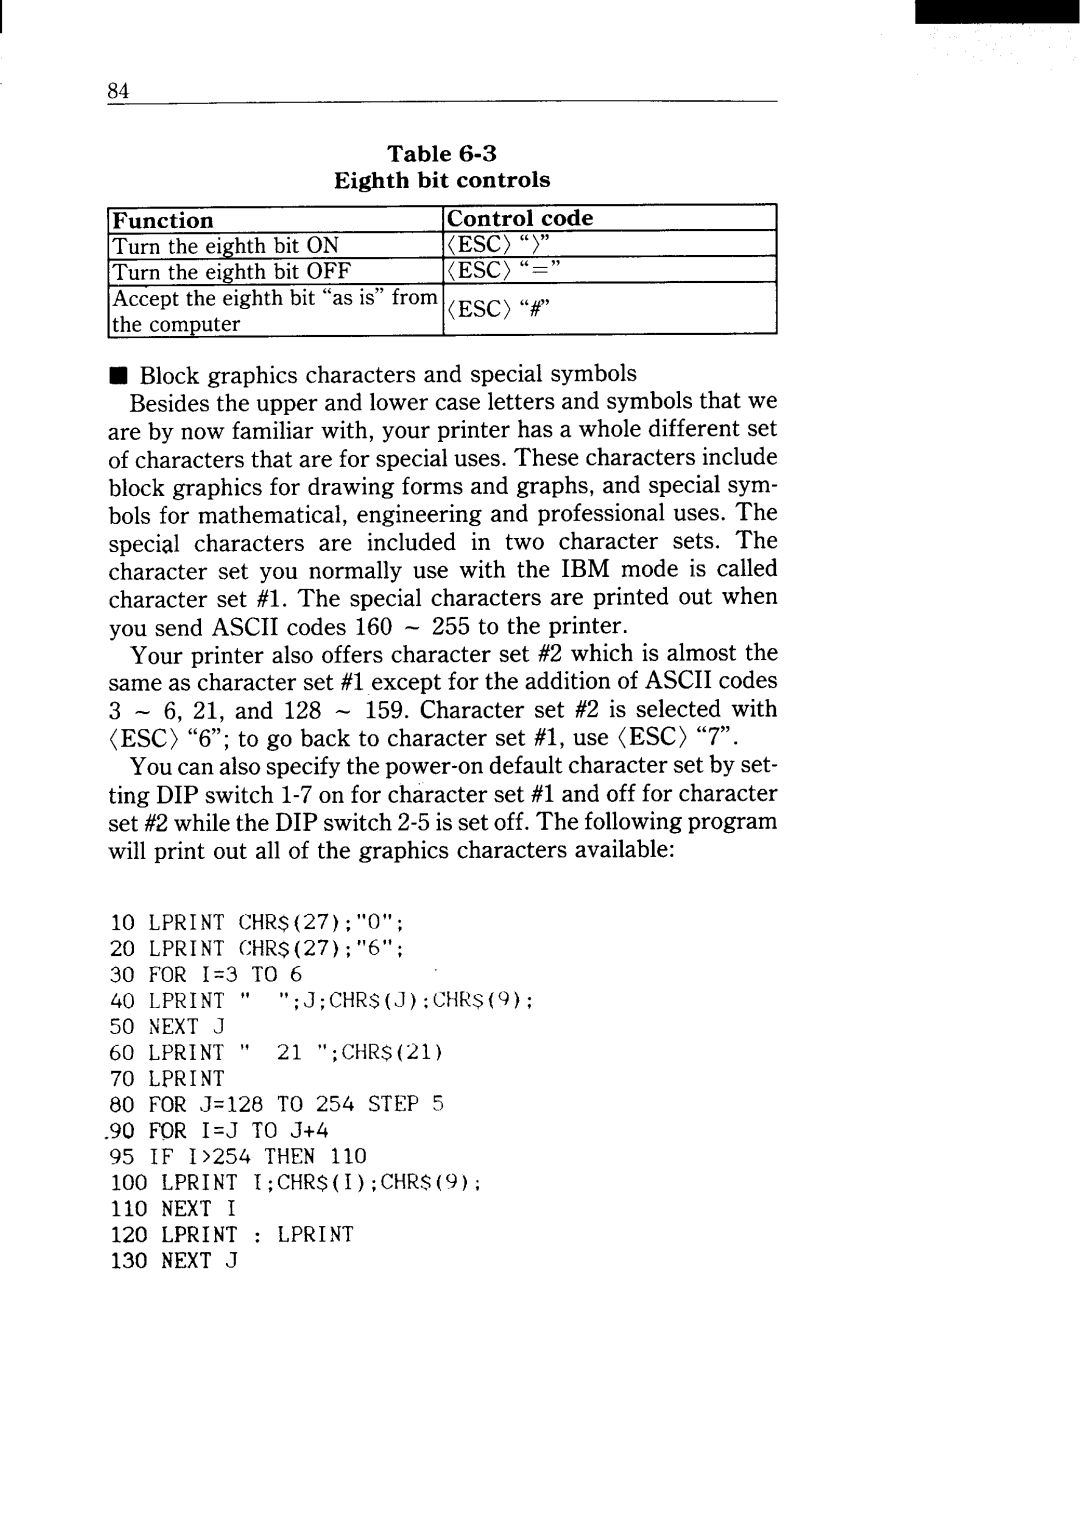 Star Micronics NX-15 user manual Turn the eighth bit ON, Esc “”, Turn the eighth bit OFF, Esc “=” 